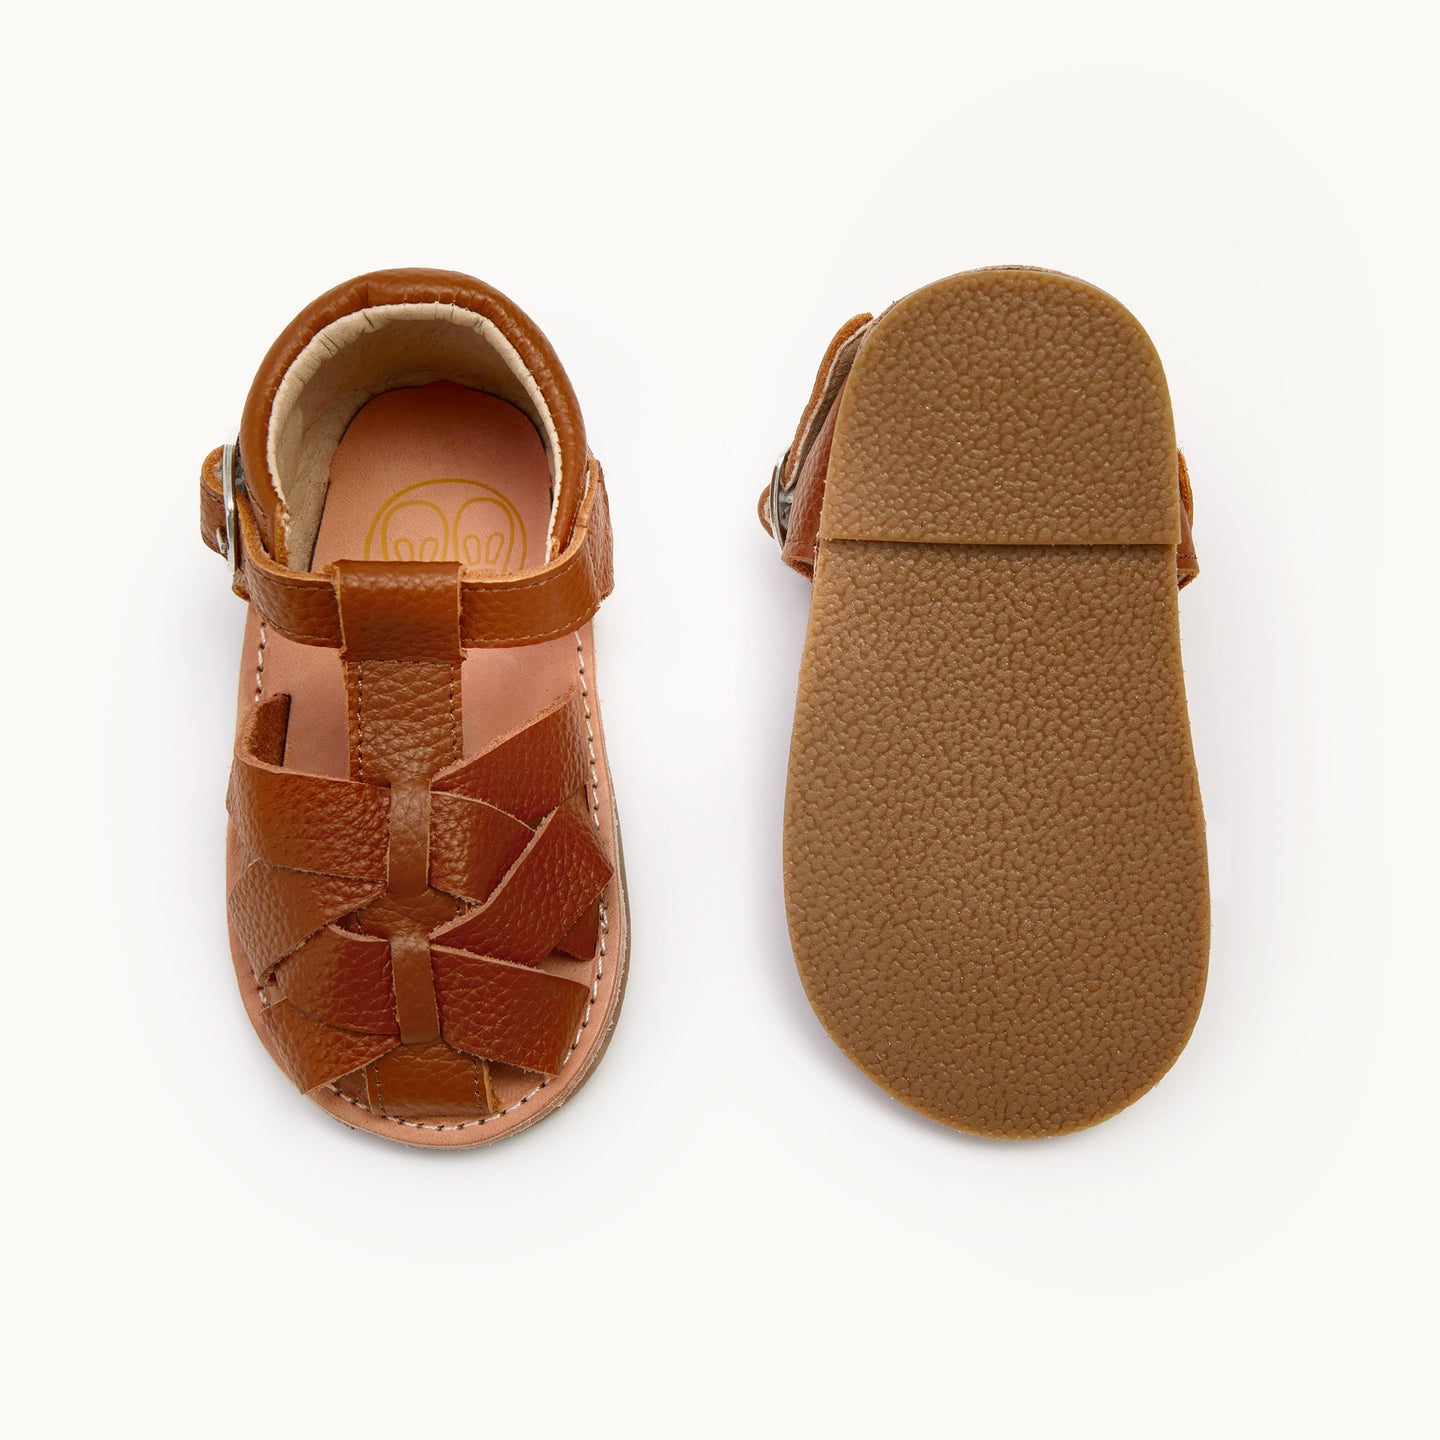 rylee cognac leather toddler sandals